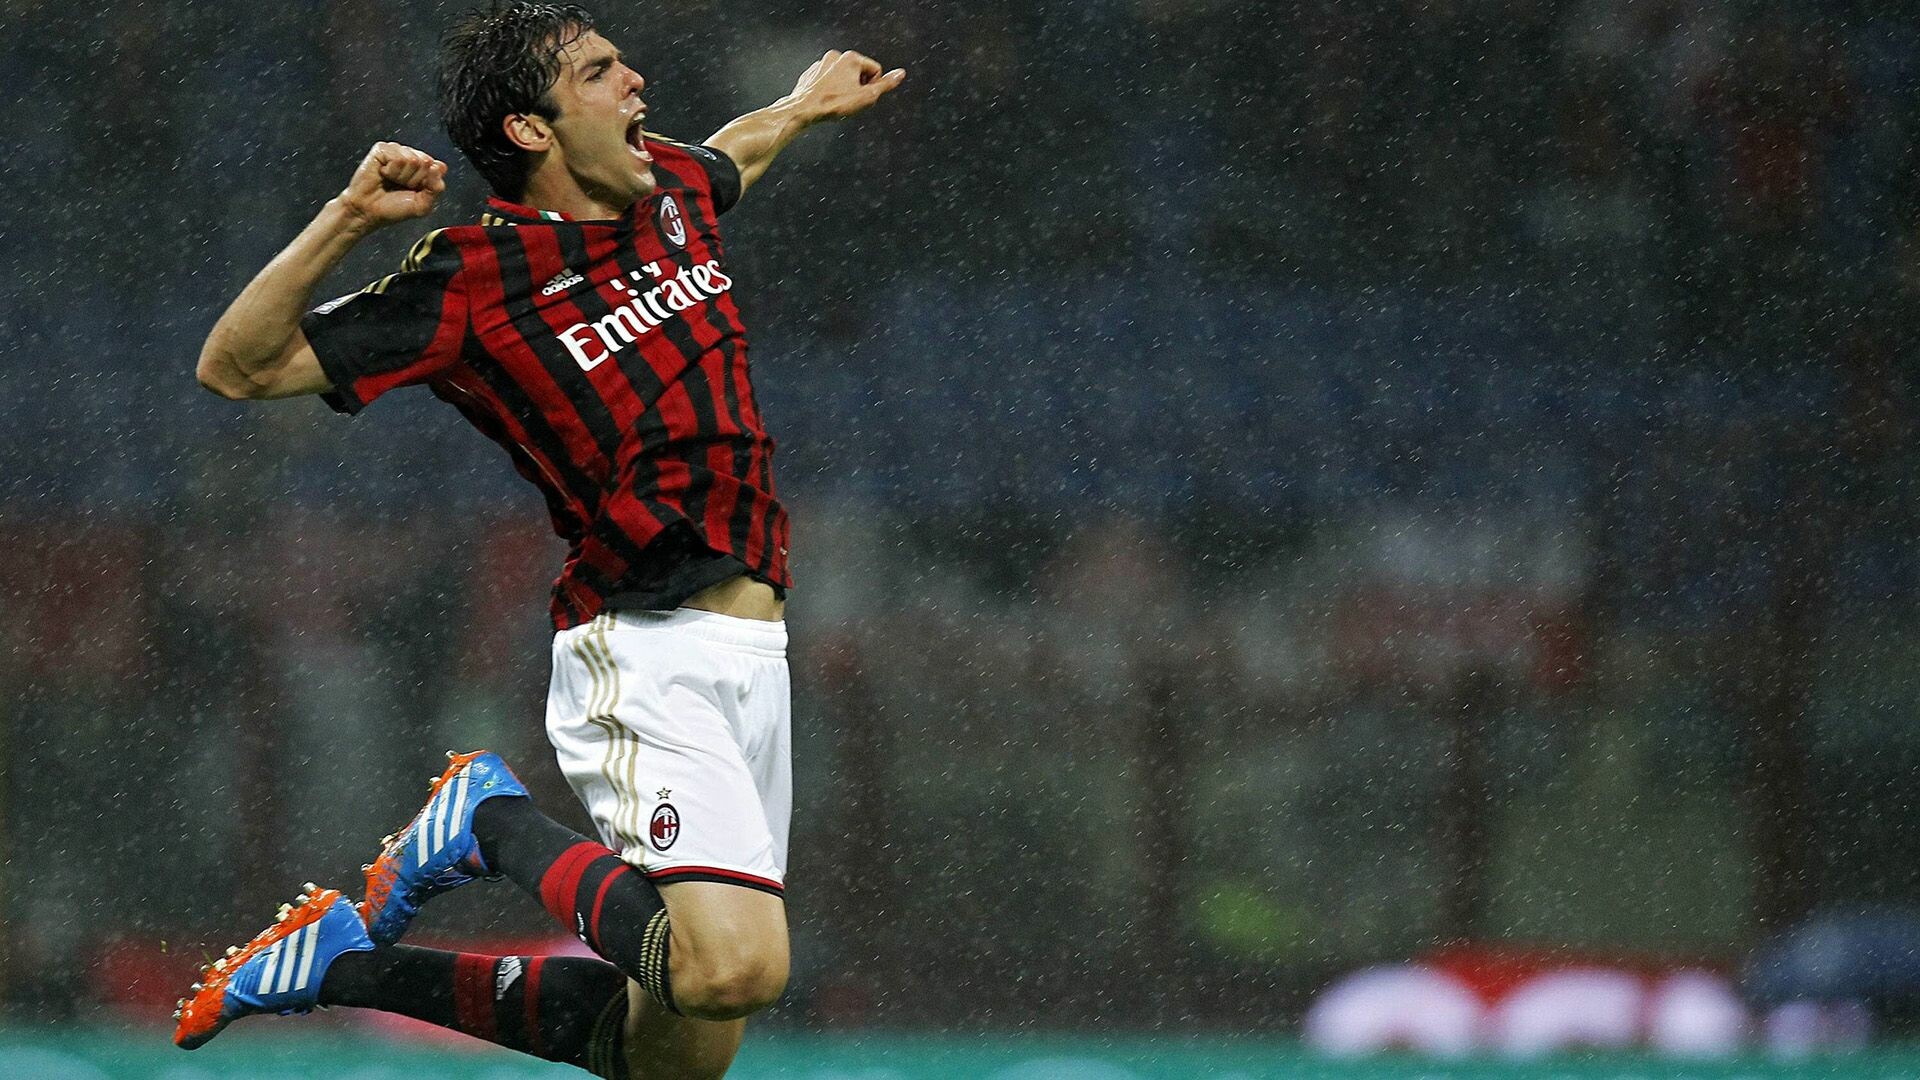 Kaká: He was named in the AC Milan Hall of Fame in 2010, A Brazilian footballer. 1920x1080 Full HD Wallpaper.